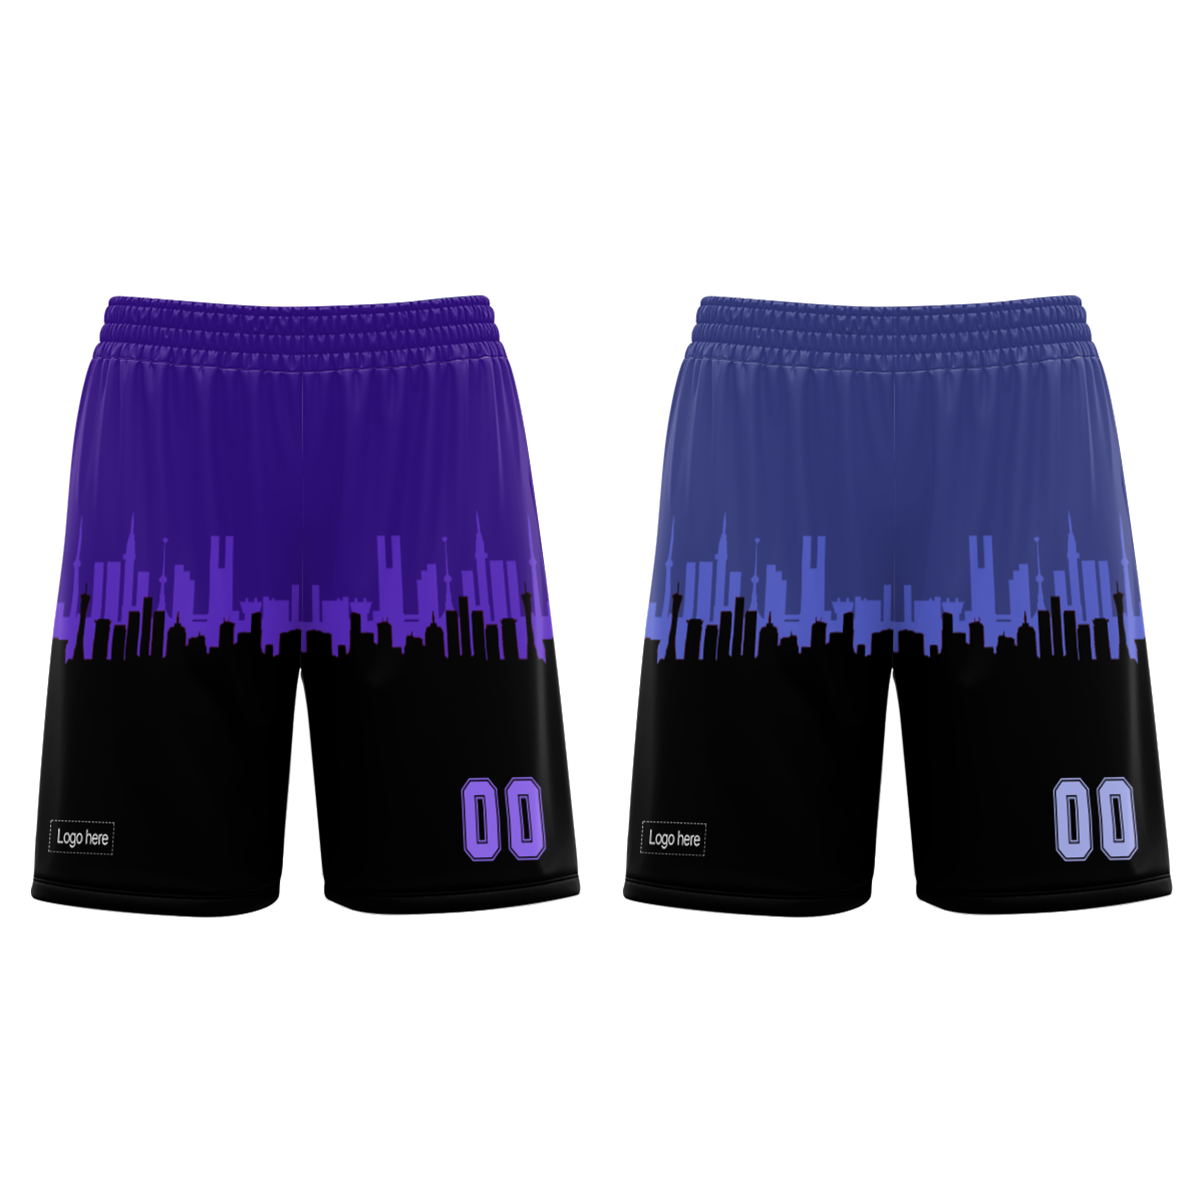 high-quality-unique-basketball-jersey-pattern-design-full-sublimation-digital-printing-oem-service-basketball-uniform-at-cj-pod-7